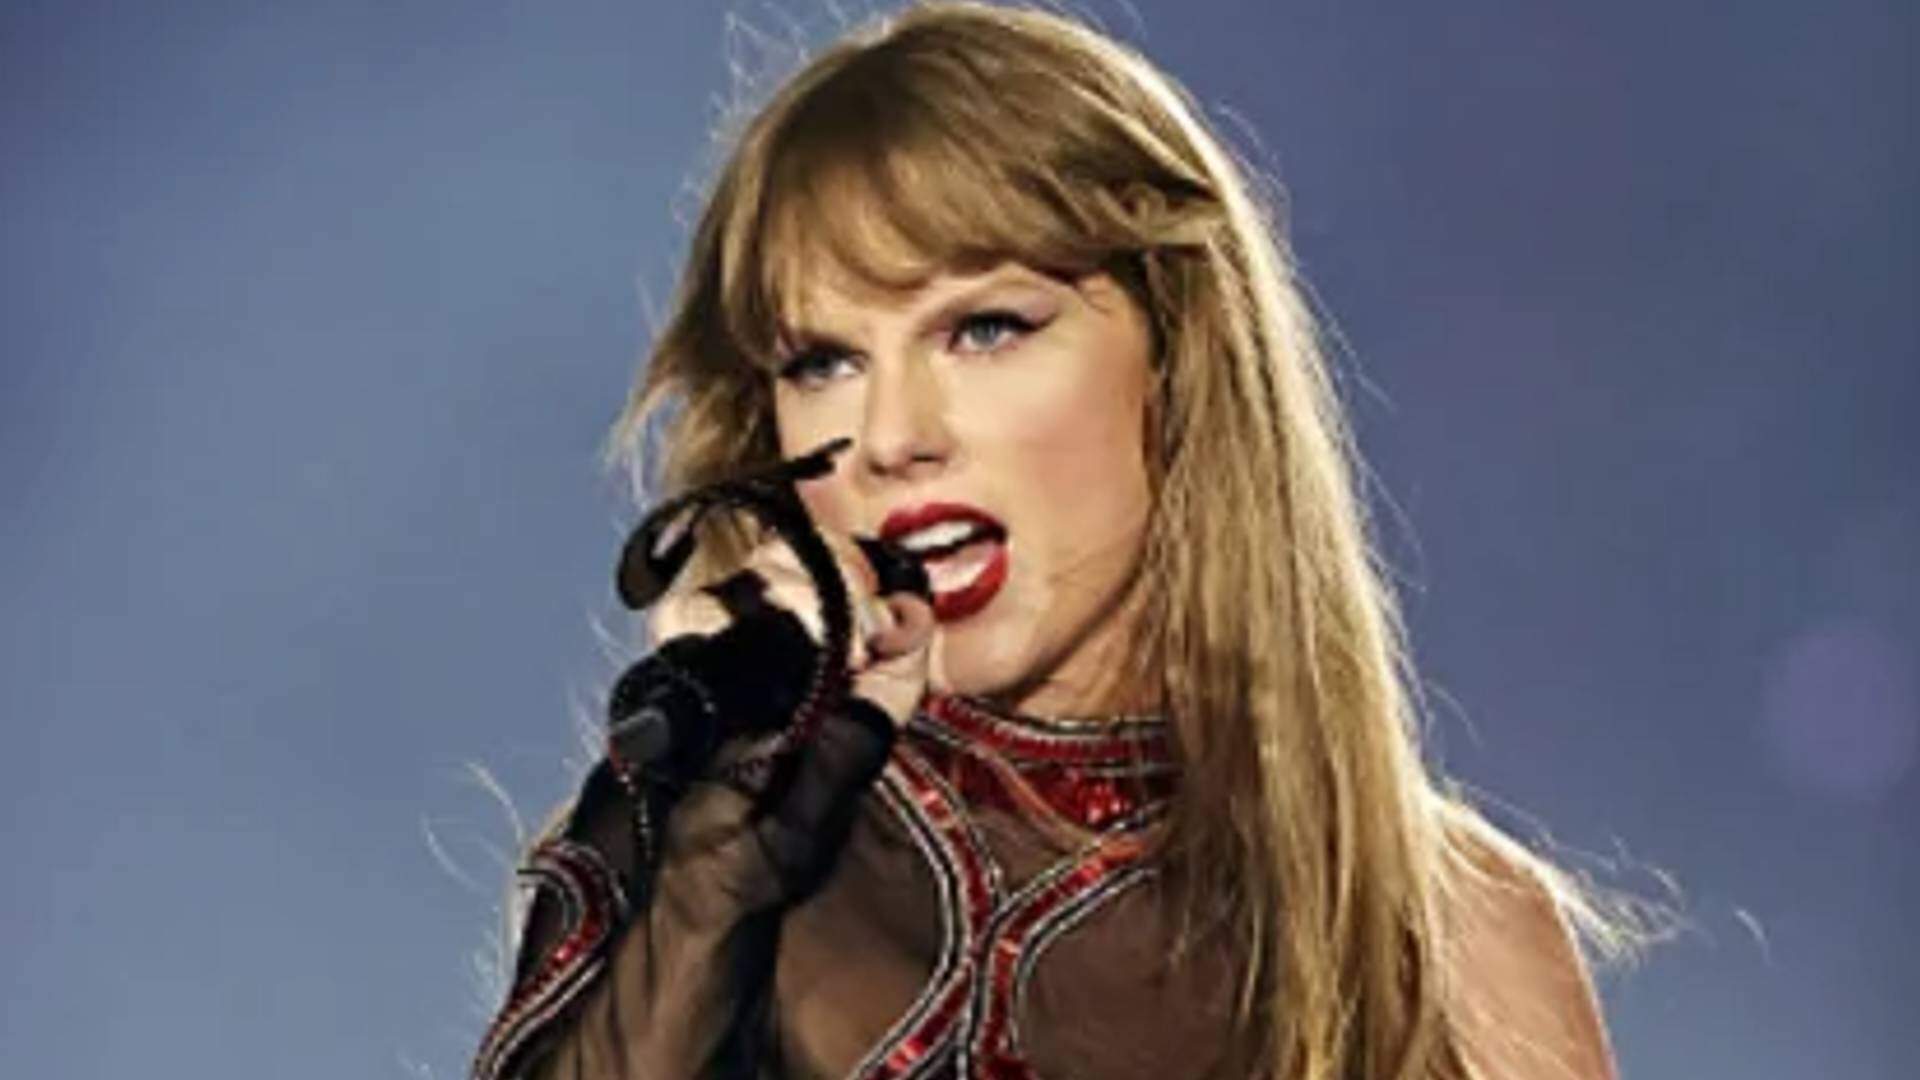 Taylor Swift passa sufoco no palco, interrompe show às pressas e cena constrangedora da cantora viraliza na web - Metropolitana FM